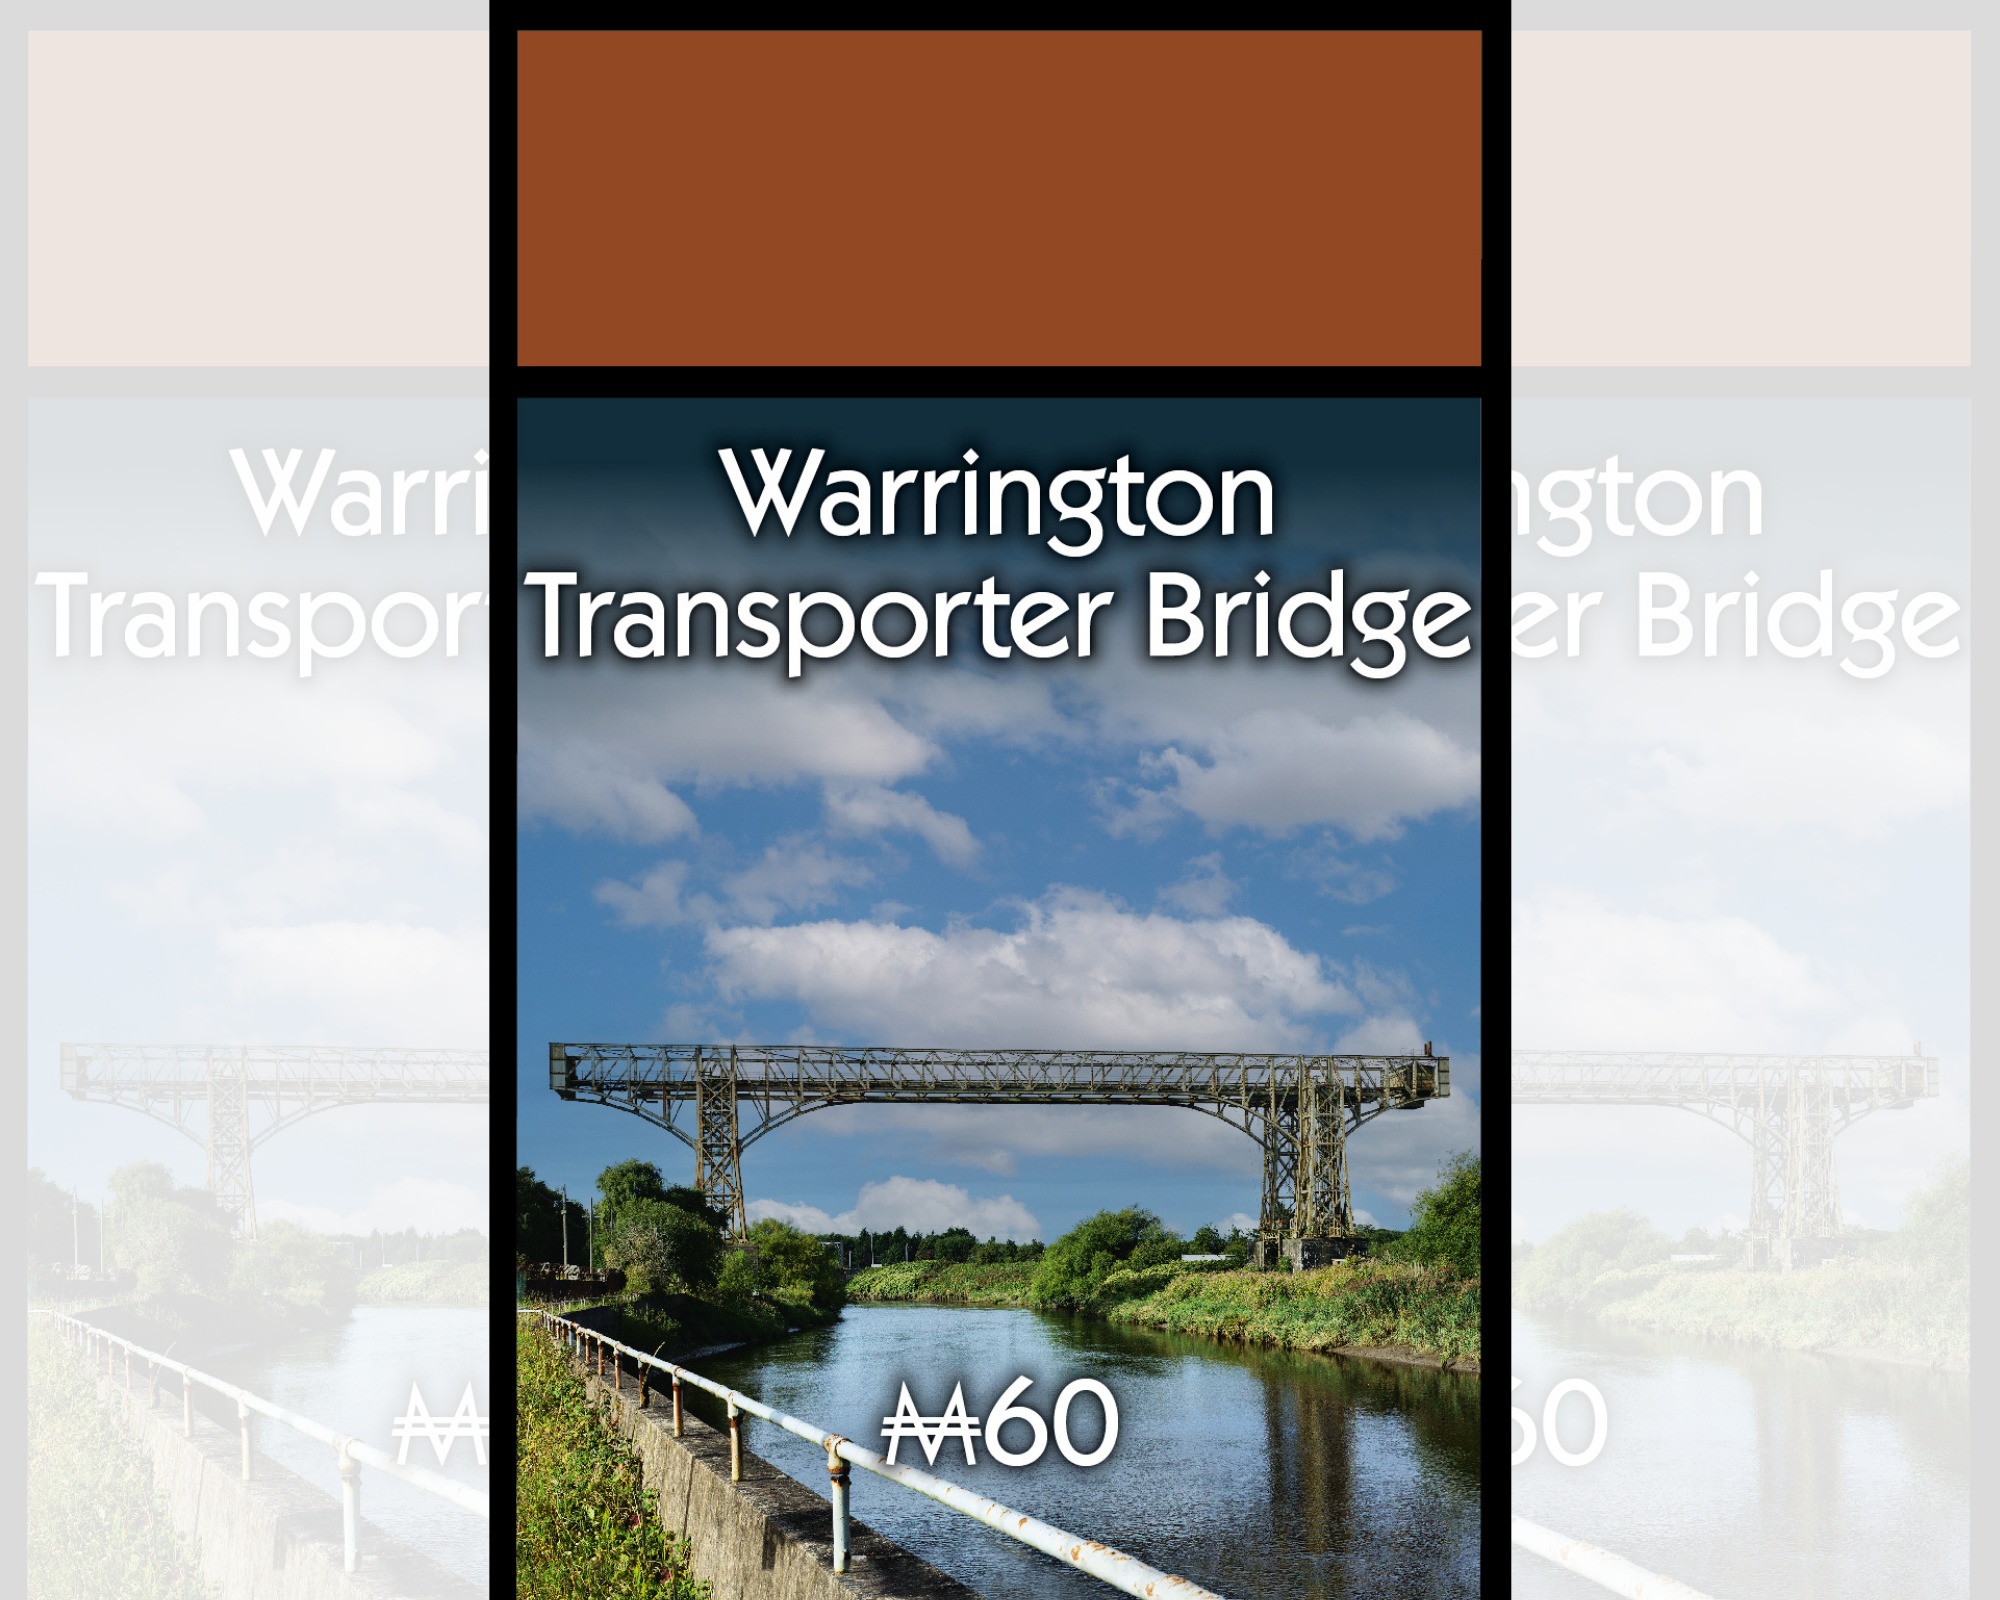 The unveiled Warrington Transporter Bridge square